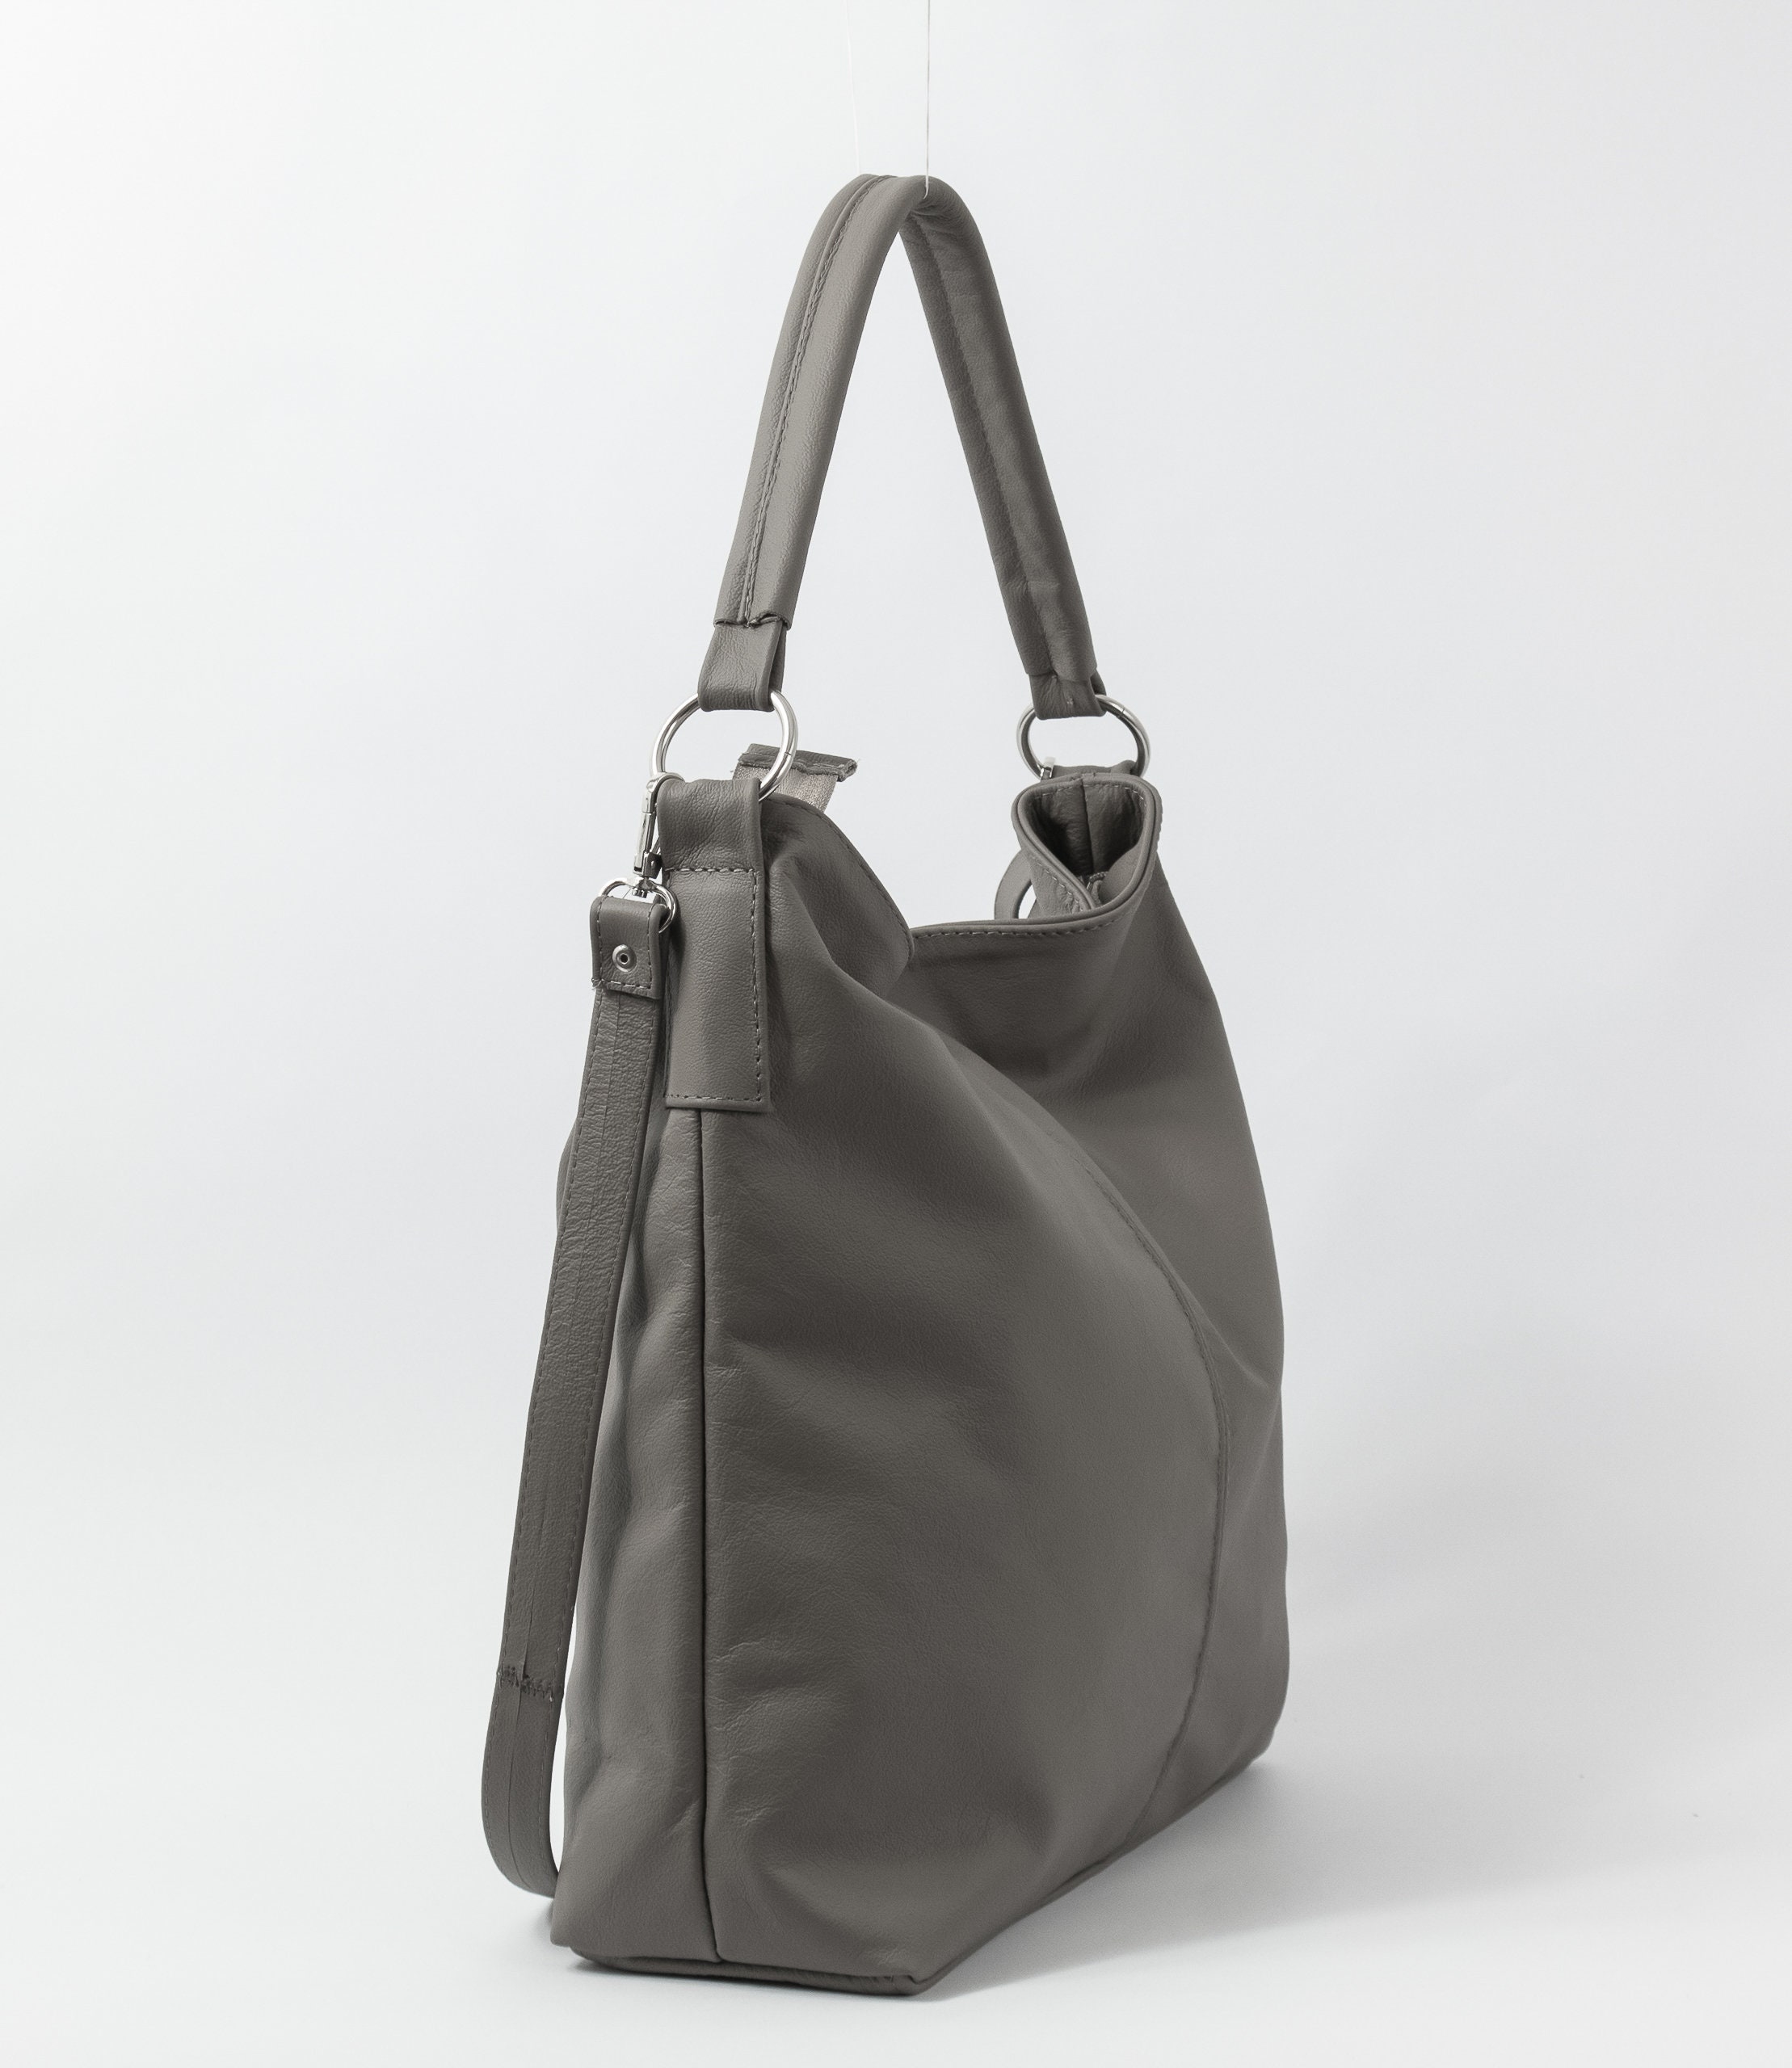 LEATHER HOBO BAG Light Gray Leather Handbag Crossbody Bag | Etsy